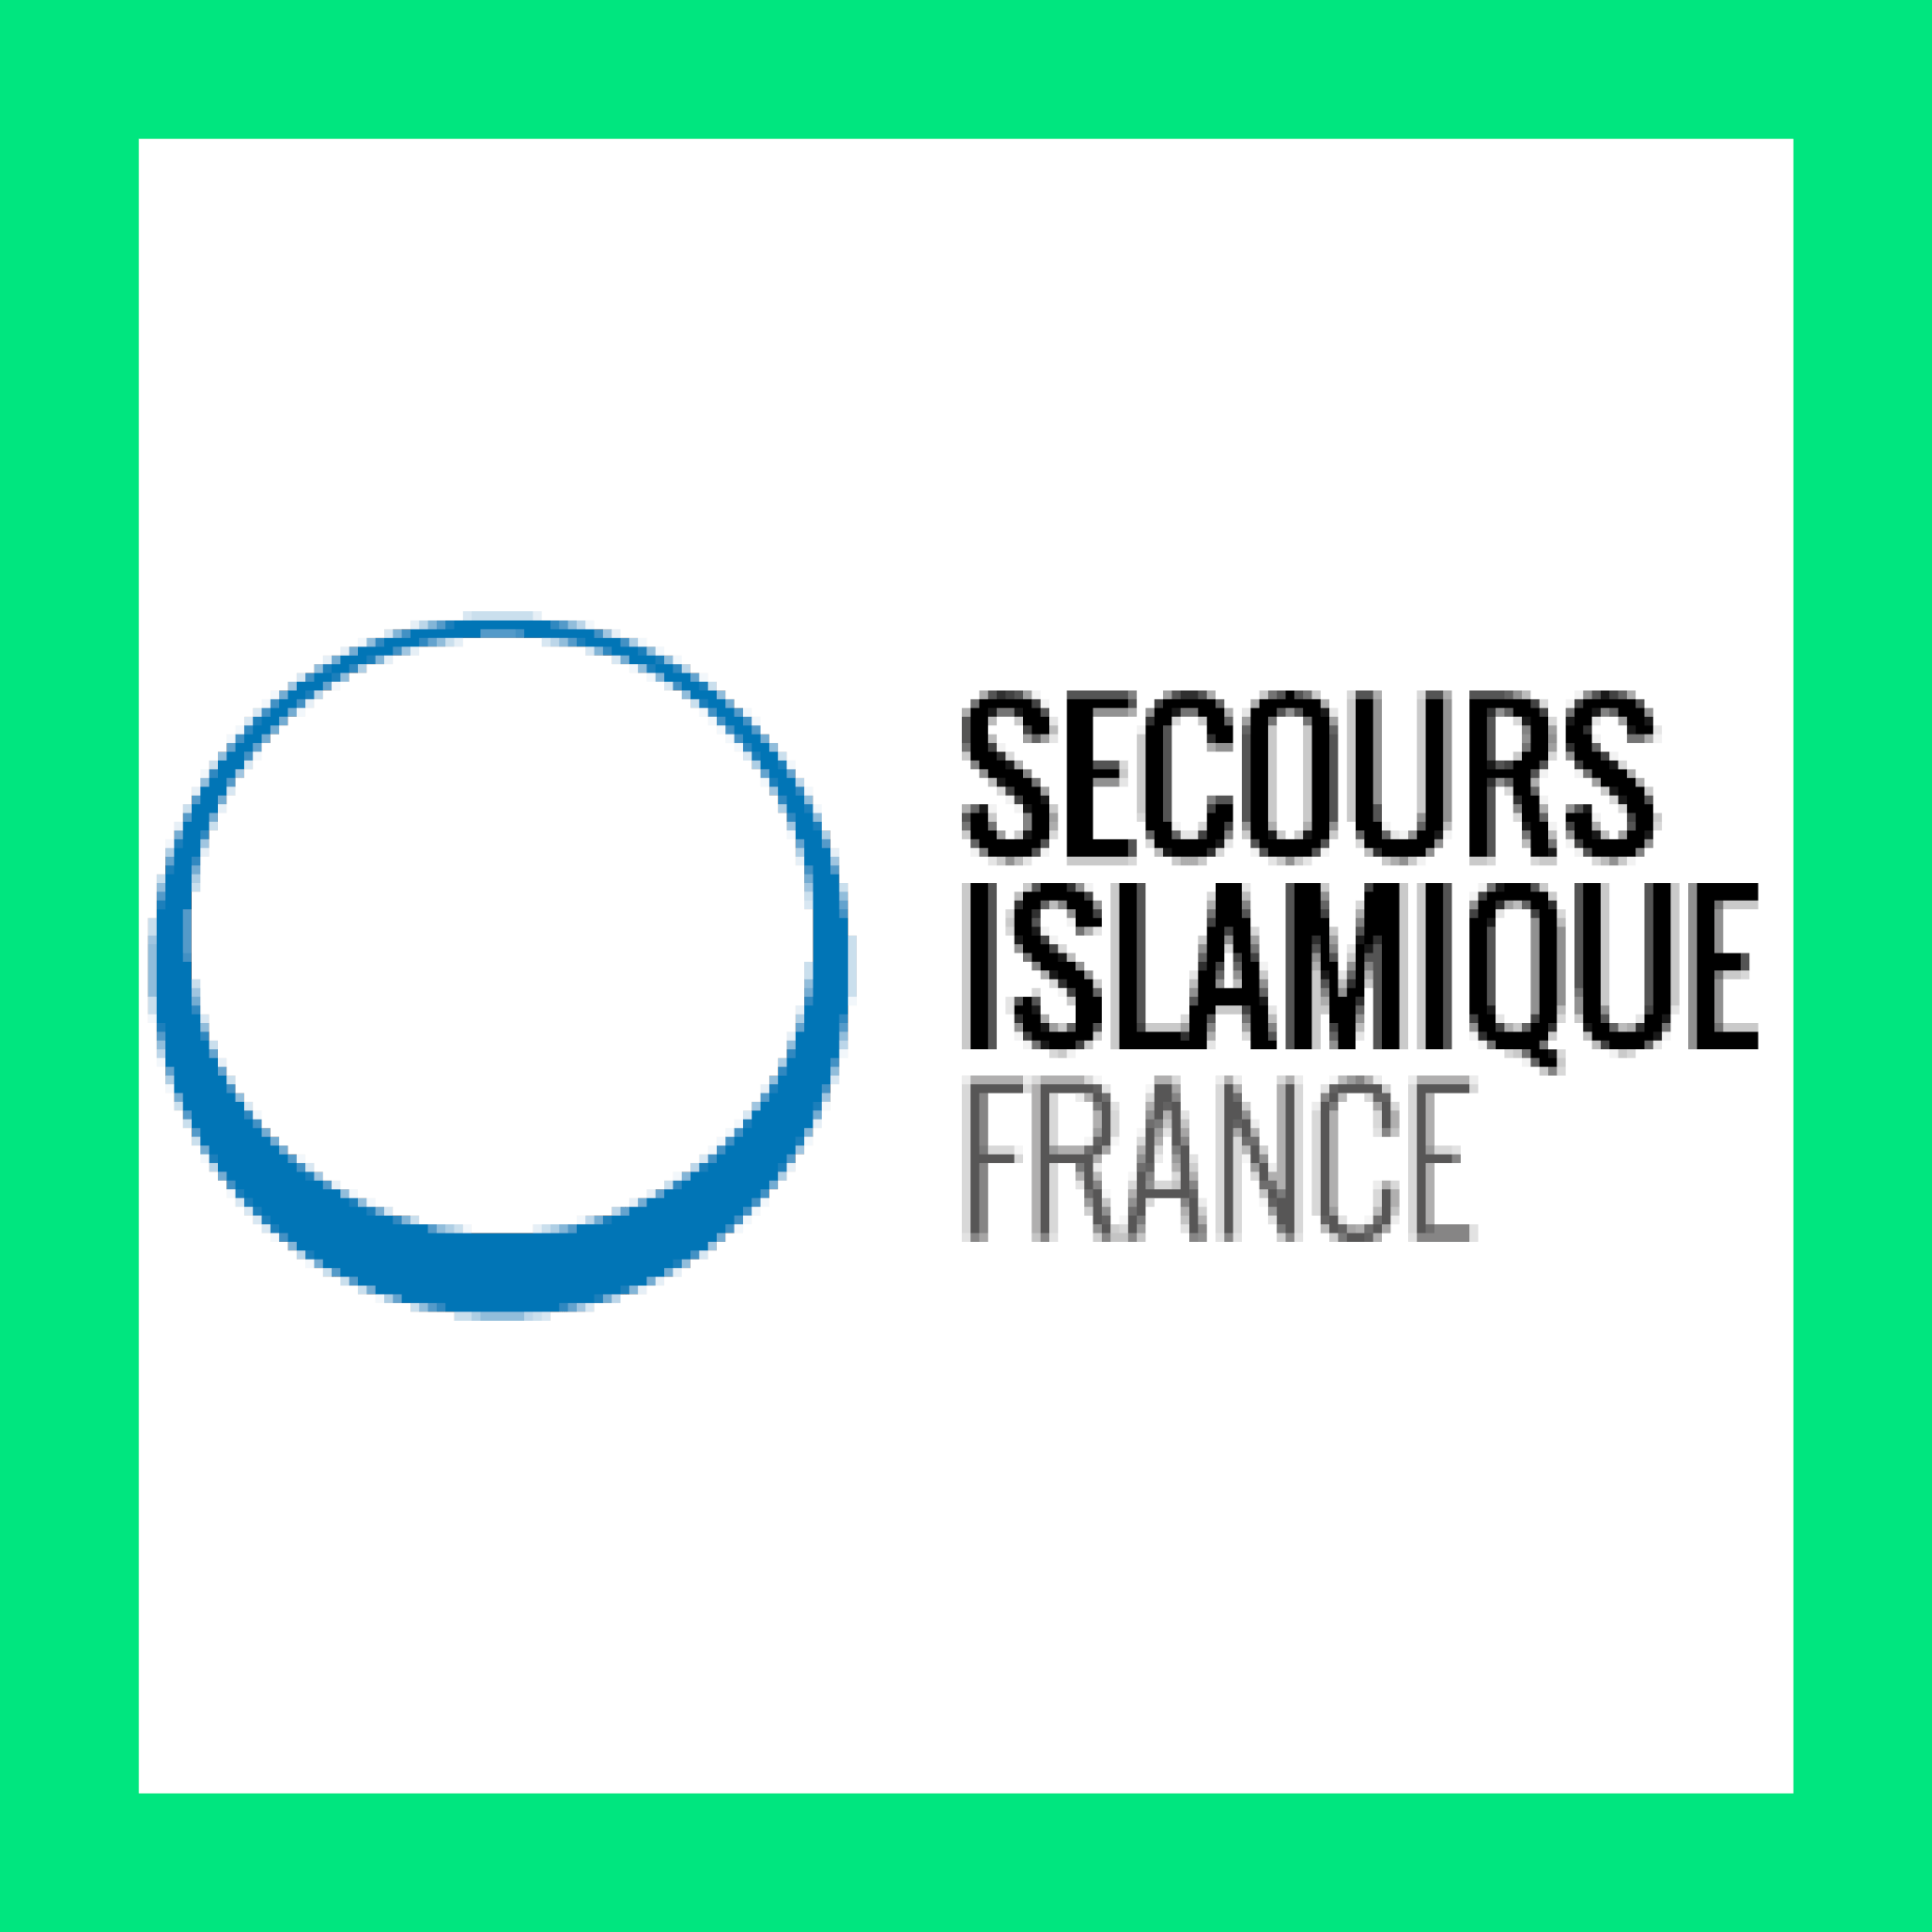 Logo Secours Islamique France